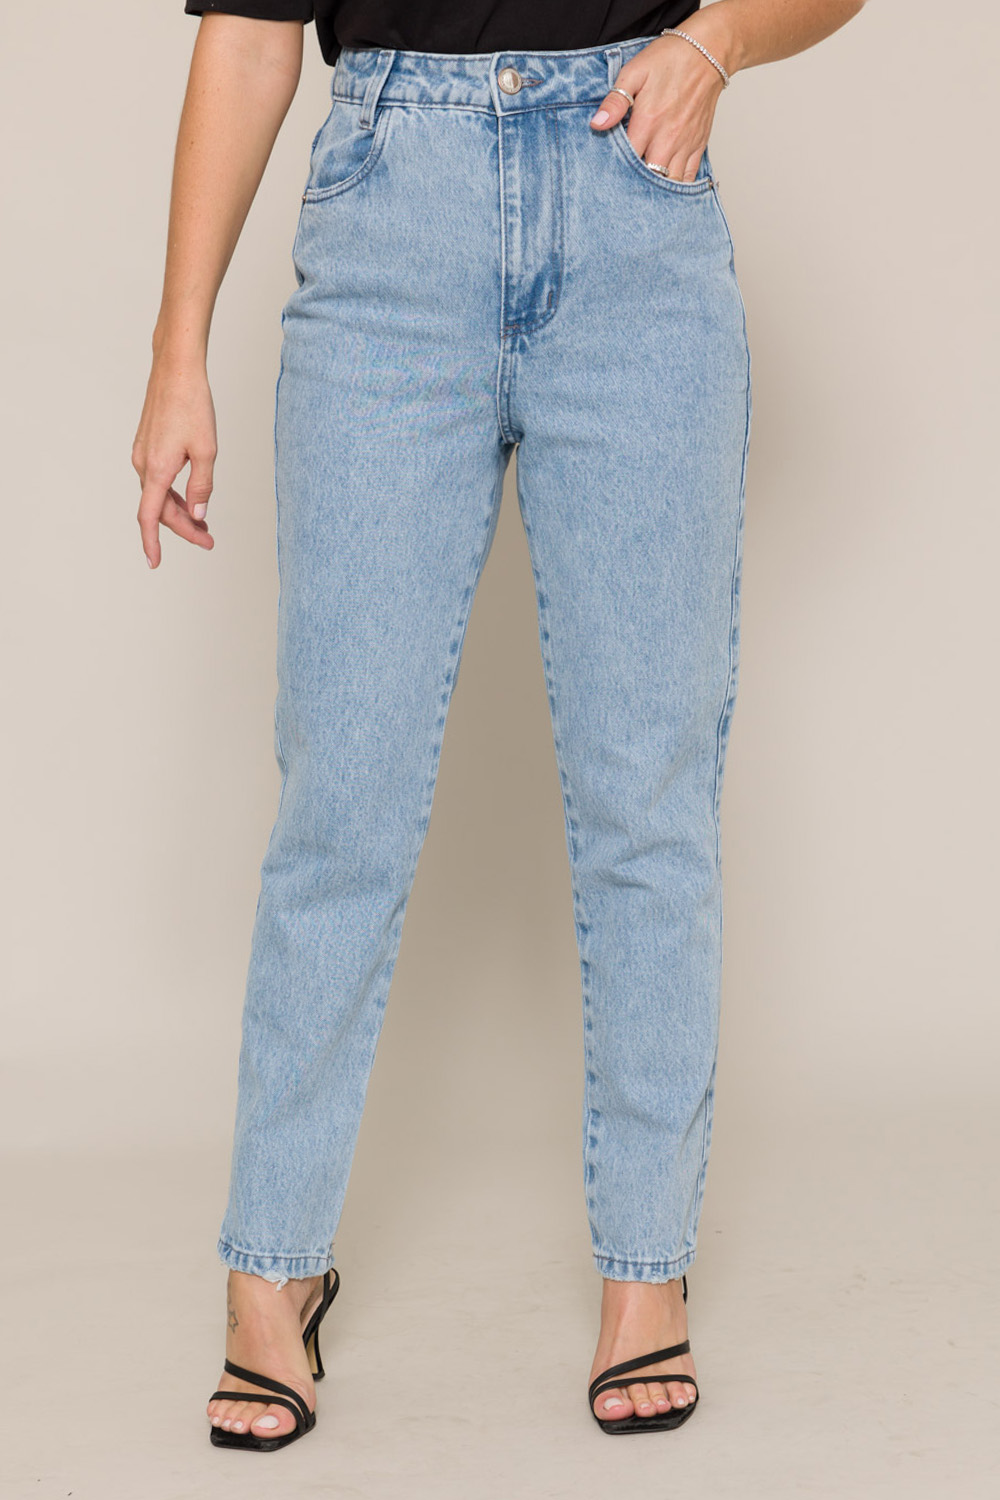 Calça Jeans Mom Cropped Basic 11574 - Jeans Claro